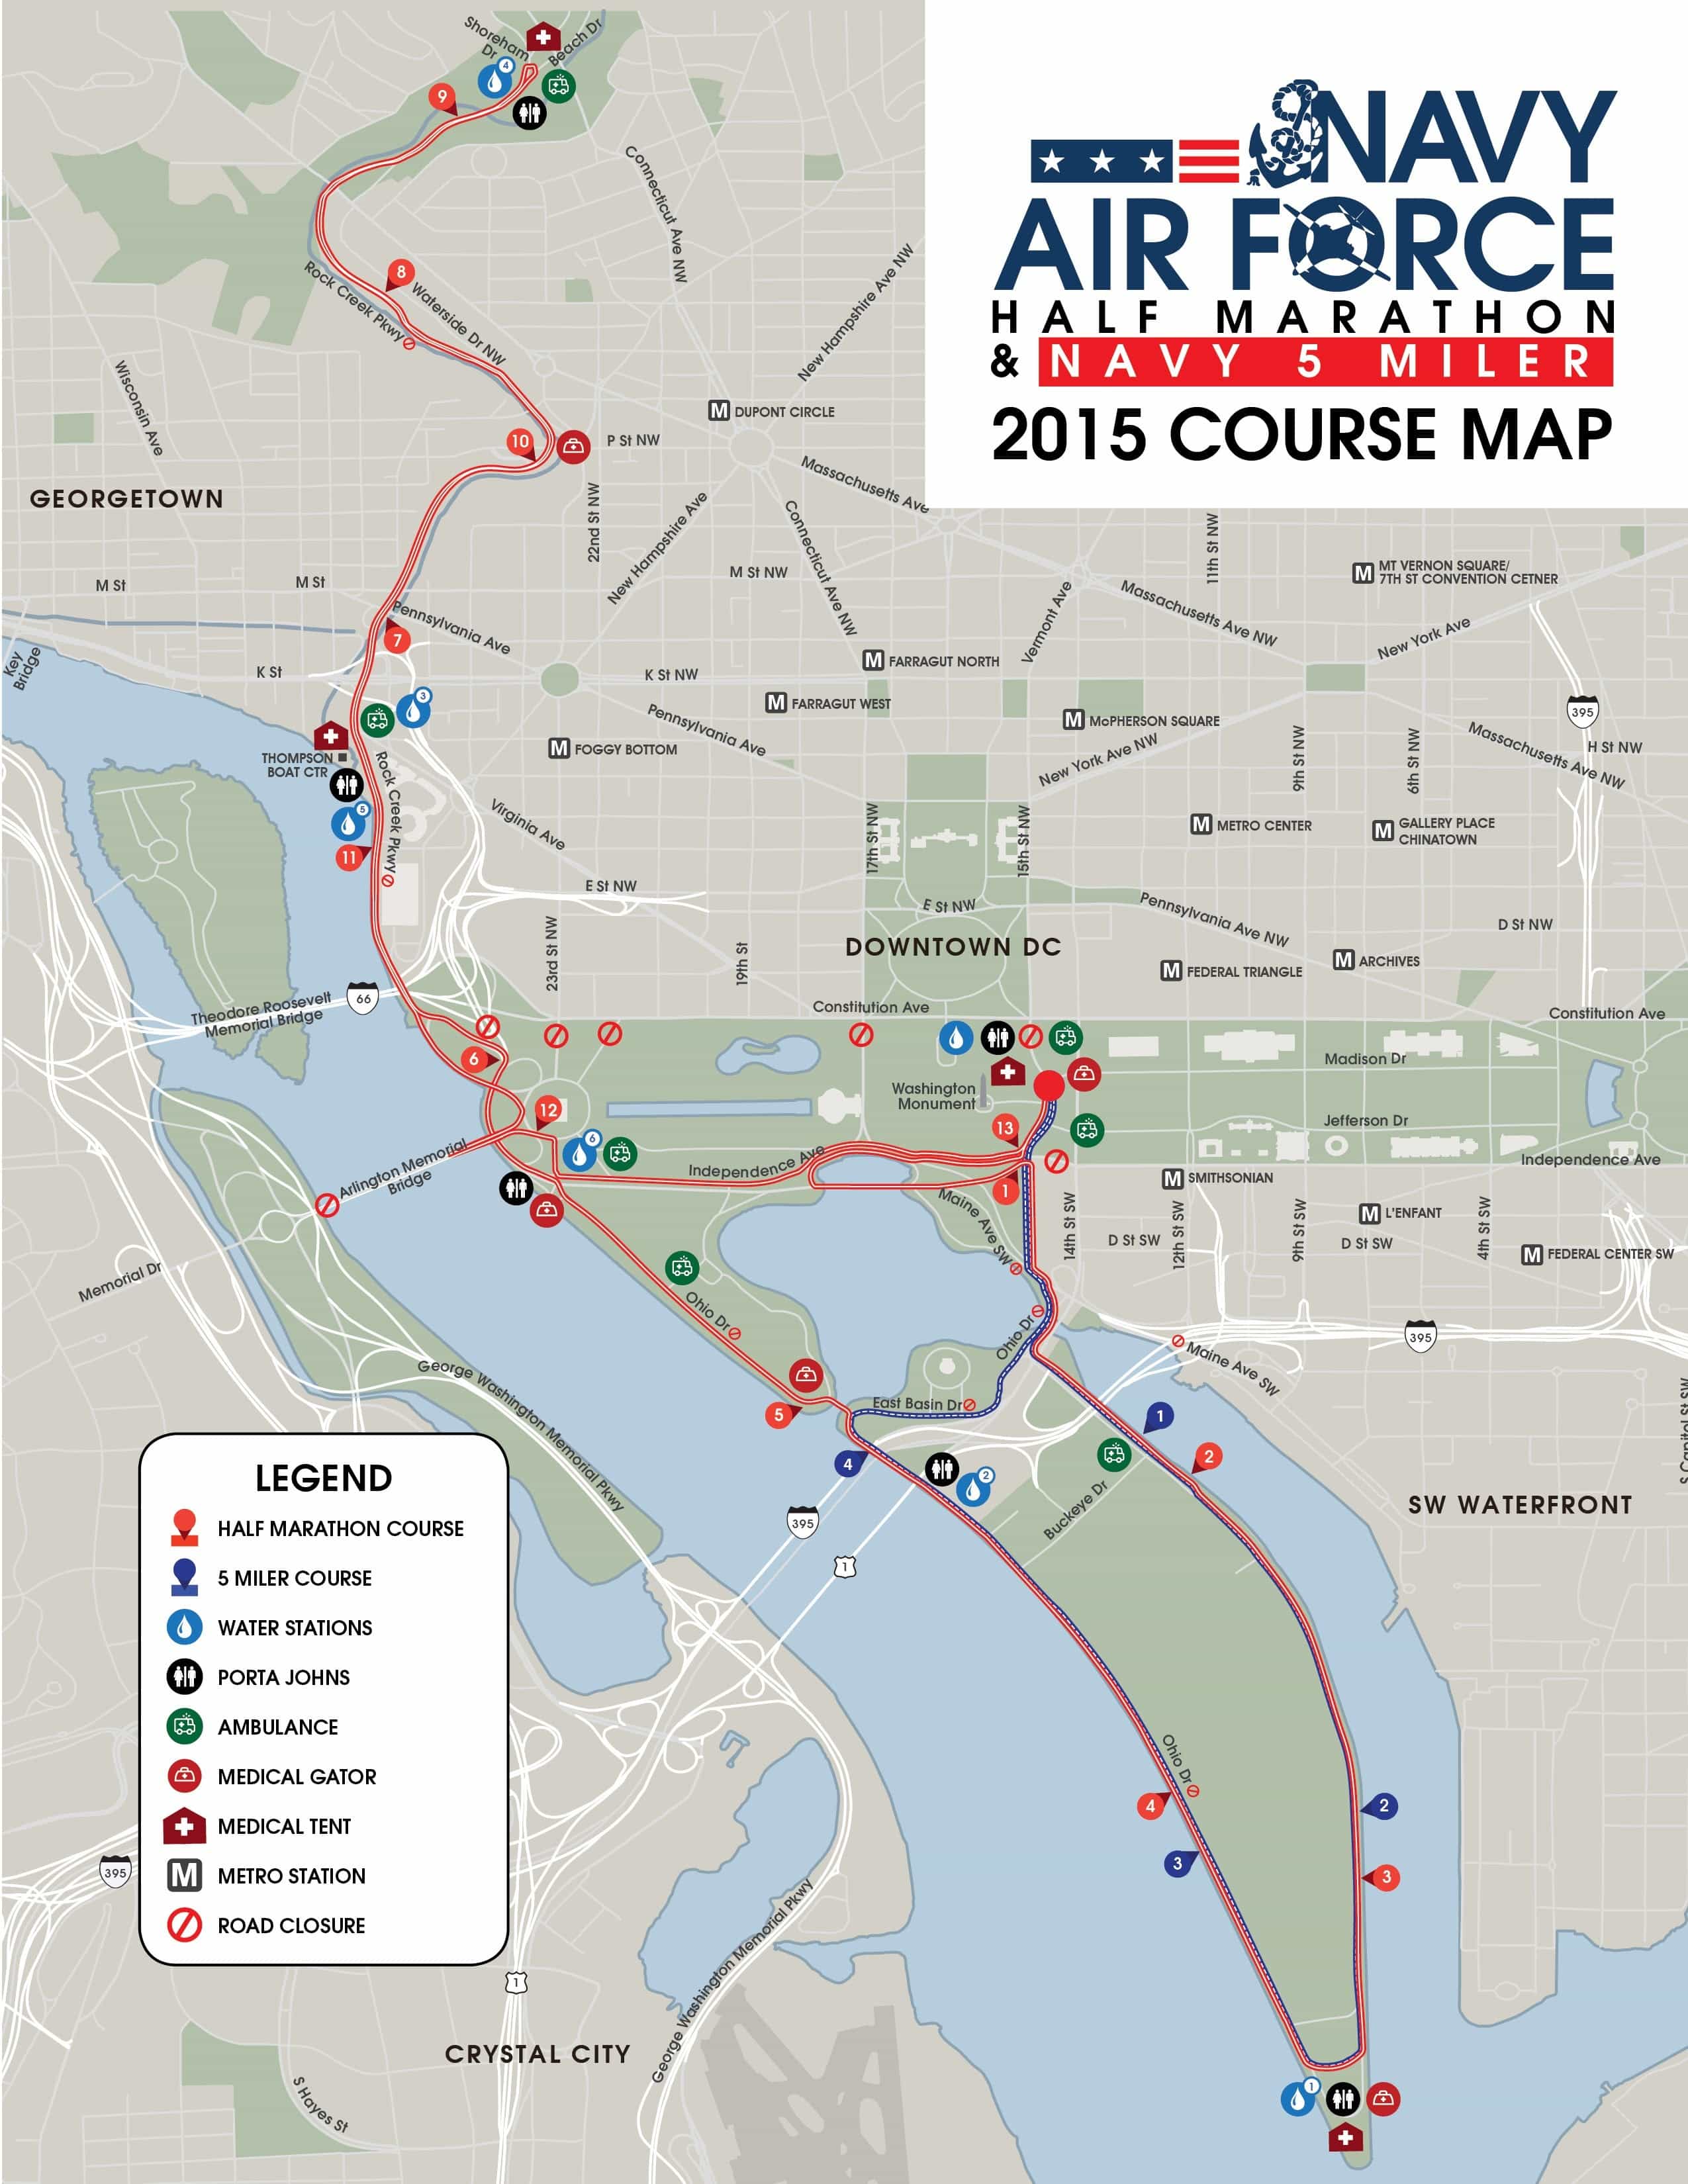 Air Force Marathon Elevation Chart